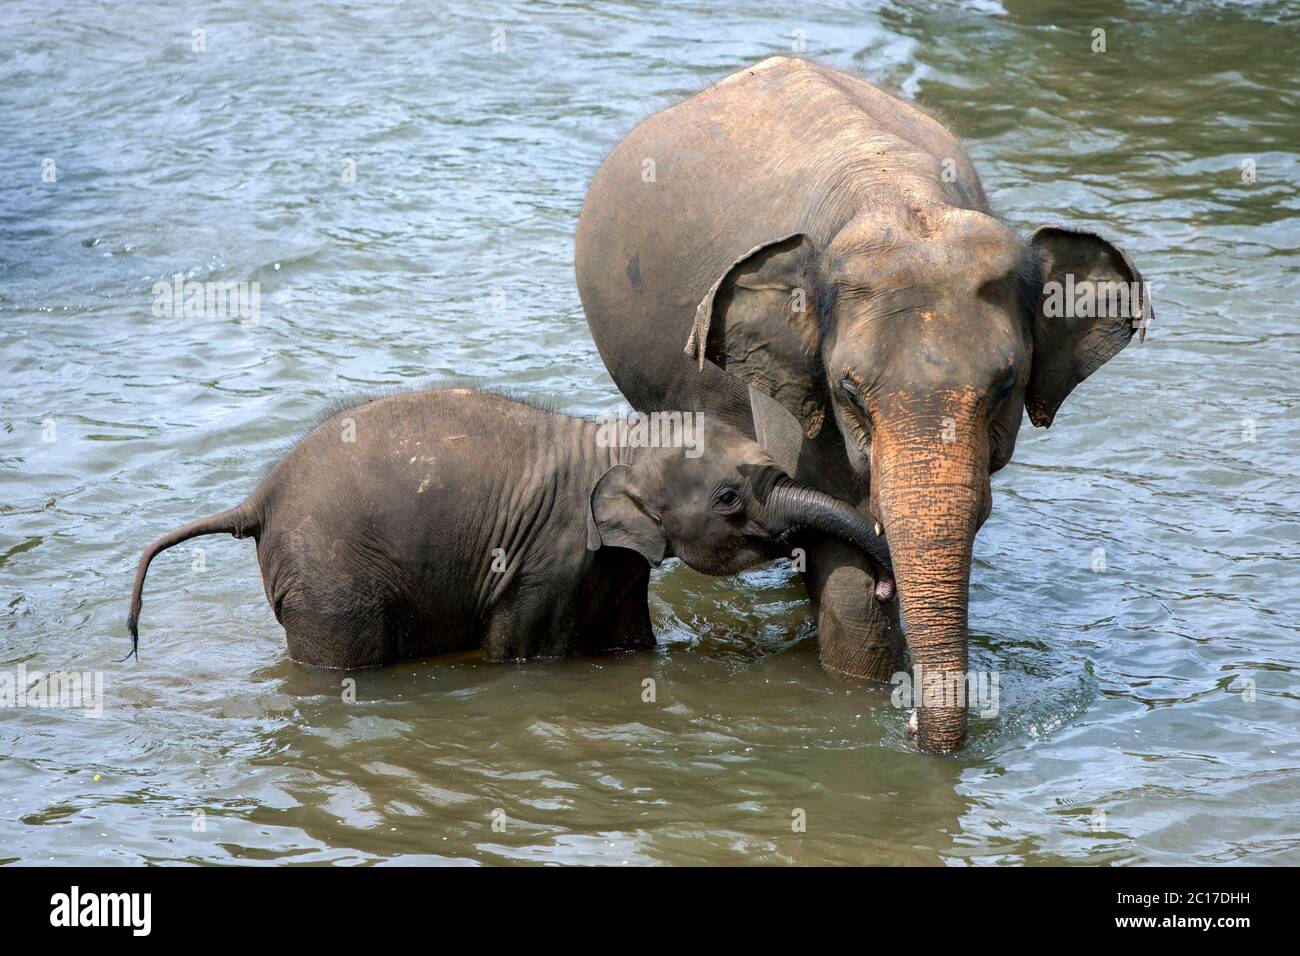 An elephant and calf from the Pinnawala Elephant Orphanage bathe in the Maha Oya River. Twice daily the elephants bathe in the river. Stock Photo